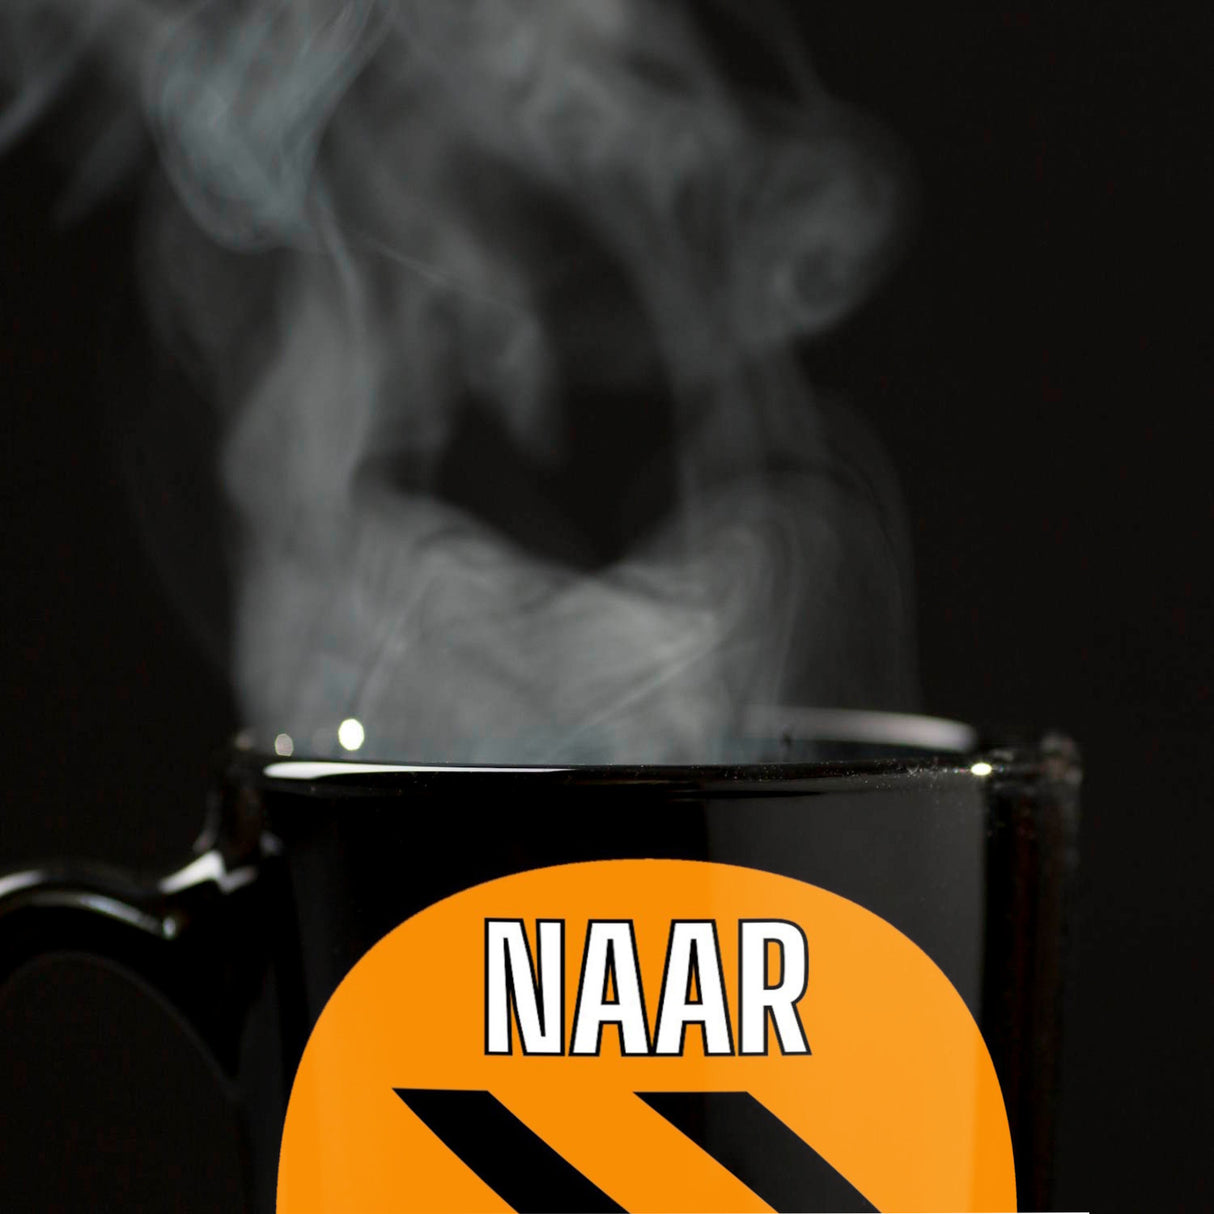 Holland Fangesang Tasse in Schwarz mit Spruch Naar Links - Naar rechts